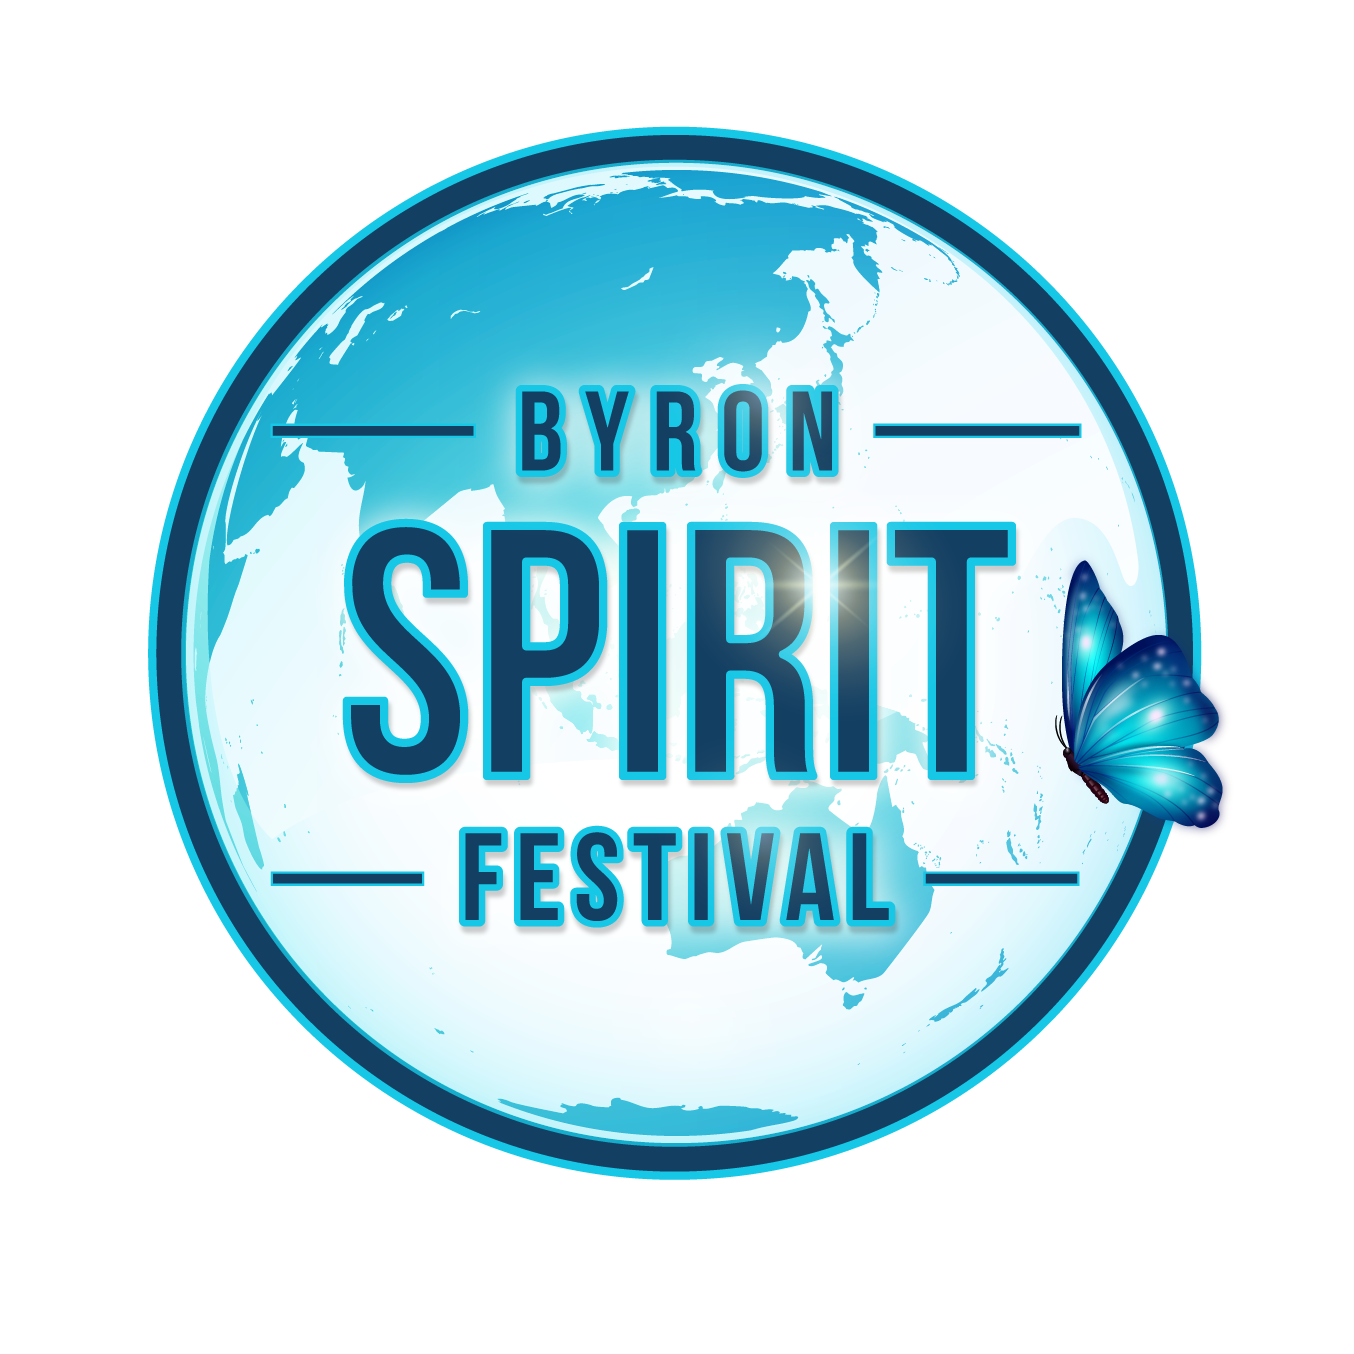 Spirit Festival Connected to Spirit